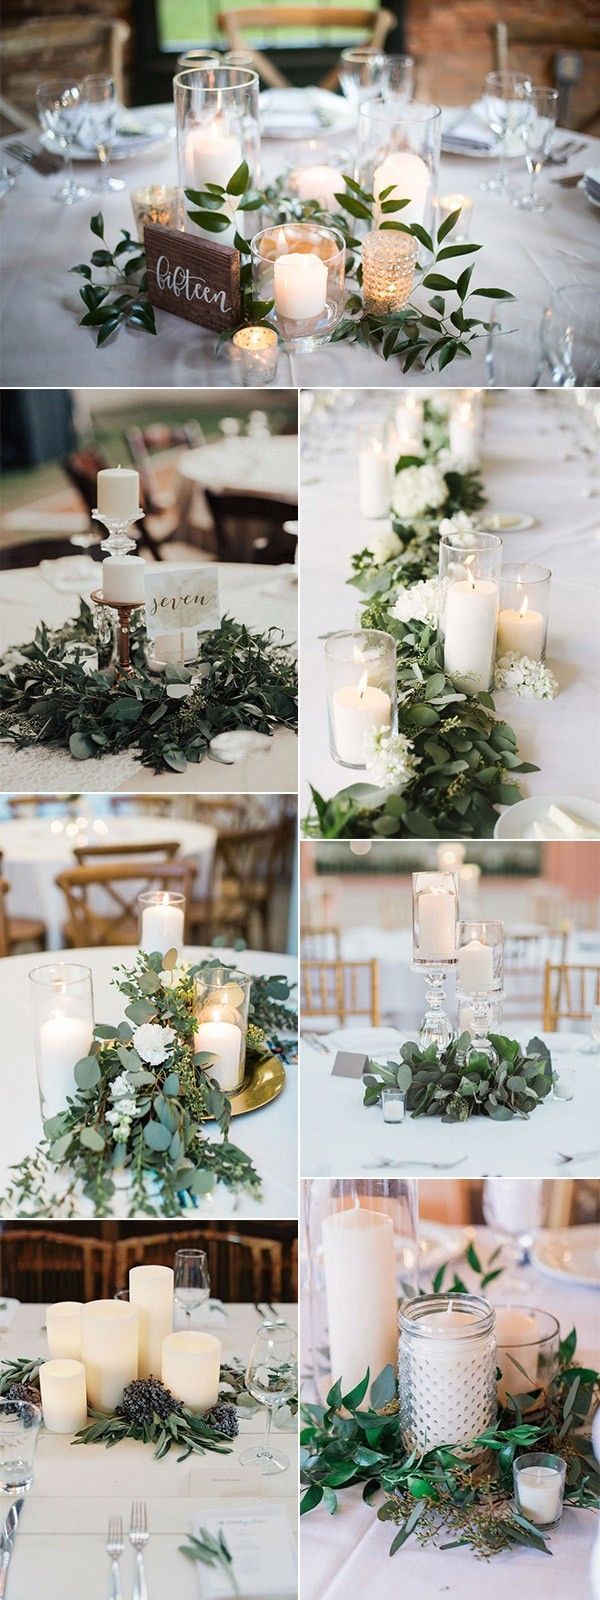 20 Budget Friendly Simple Wedding Centerpiece Ideas with Candles -   17 wedding Decoracion elegant ideas